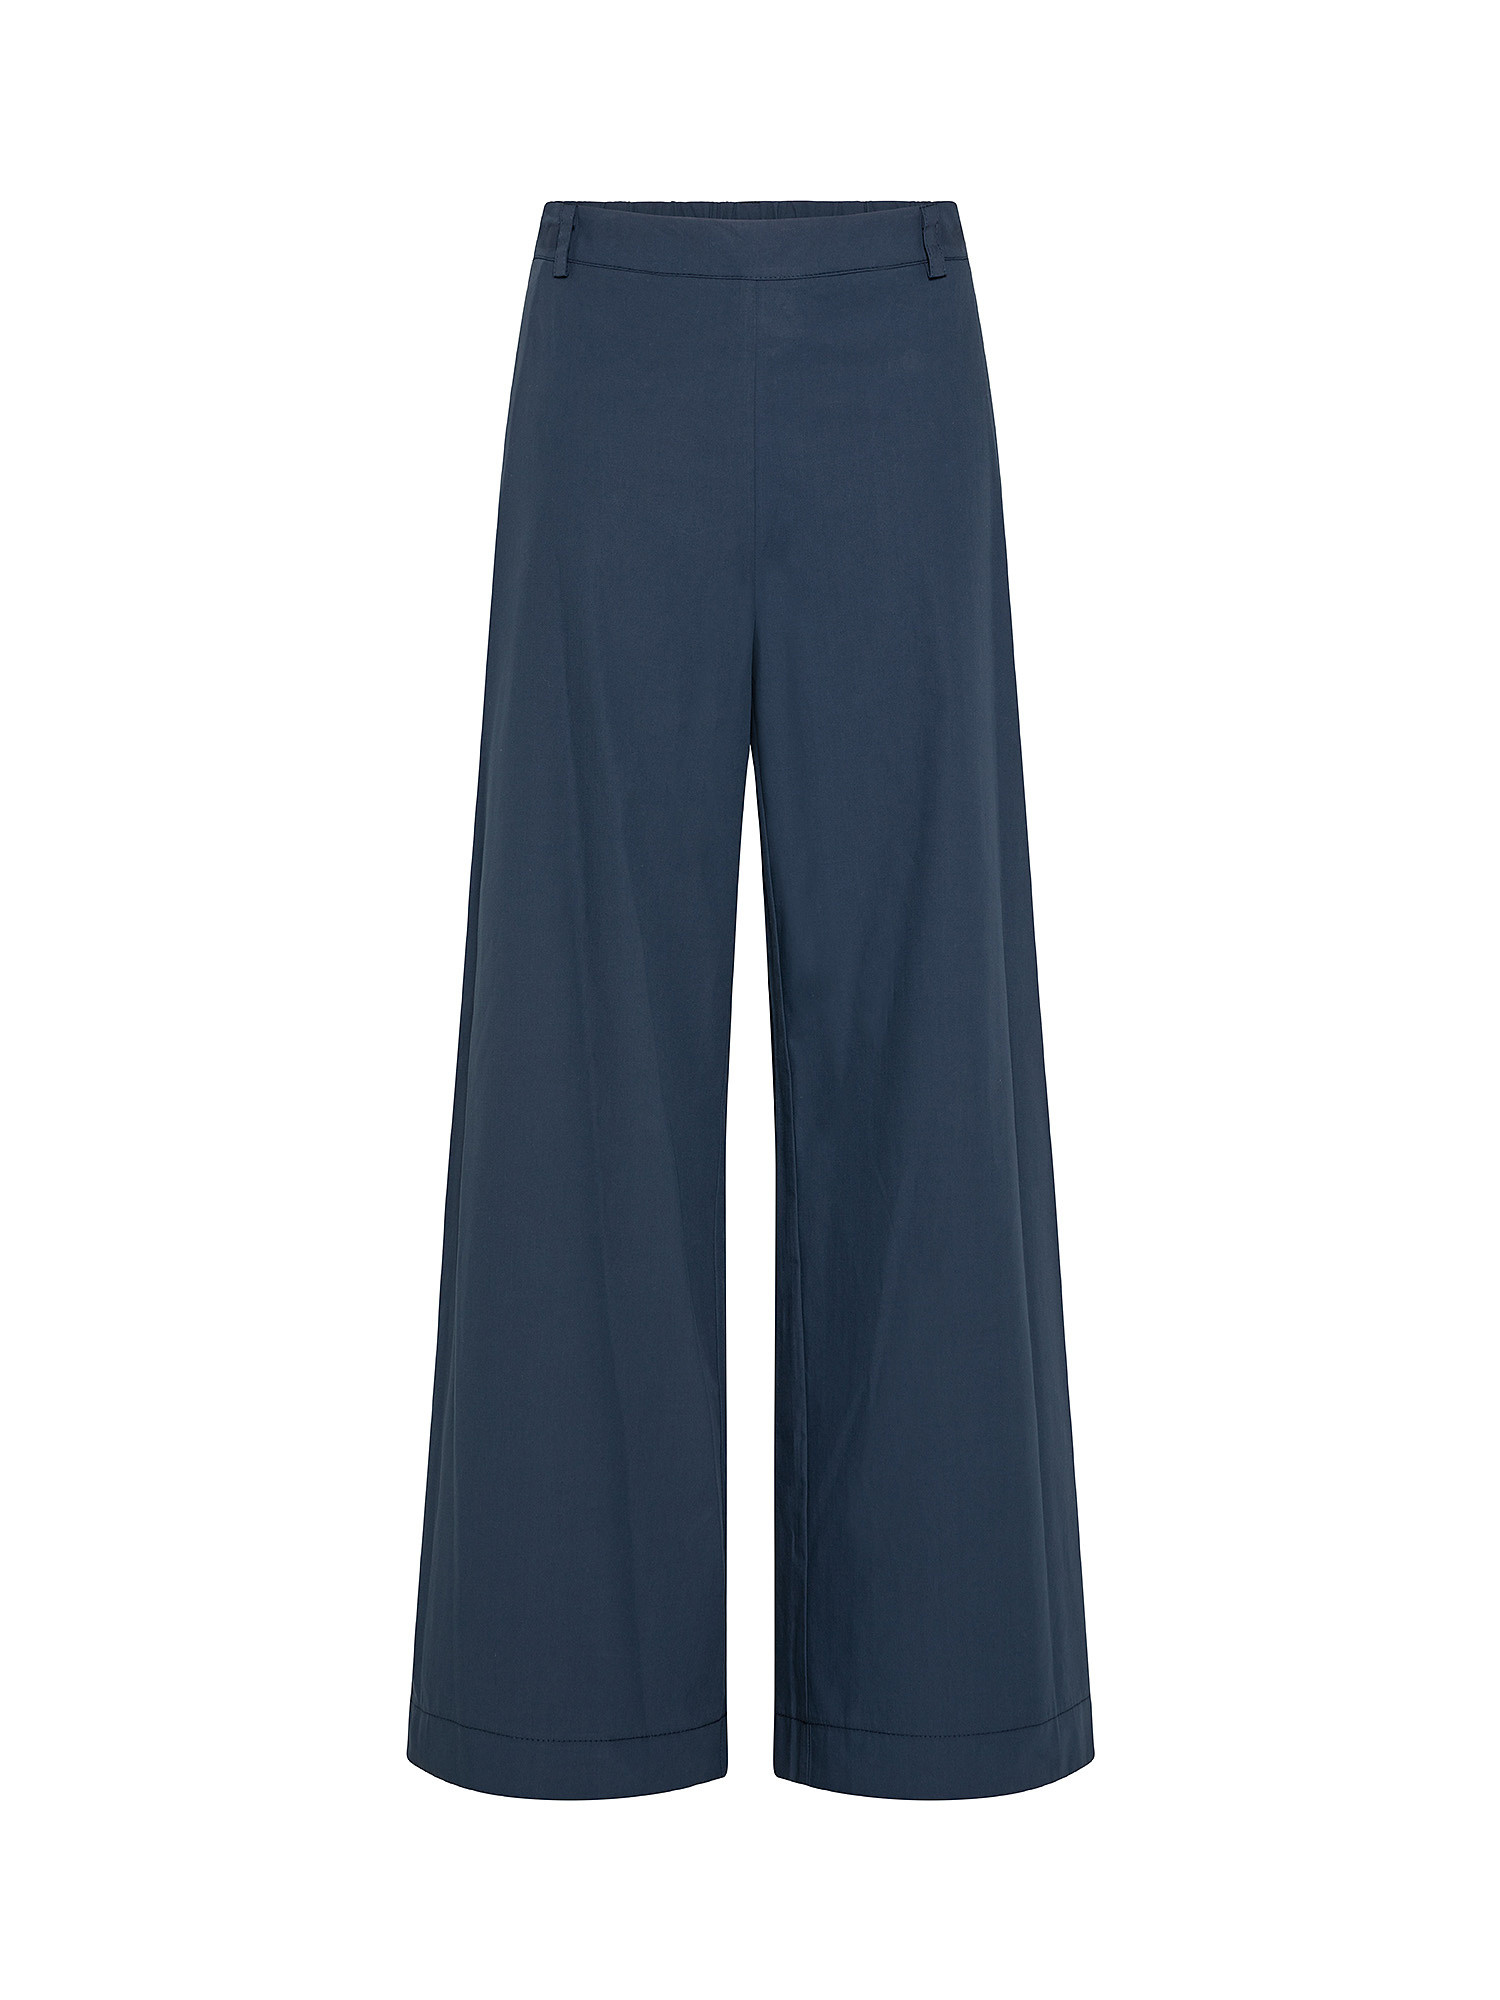 Pantaloni larghi, Blu, large image number 0